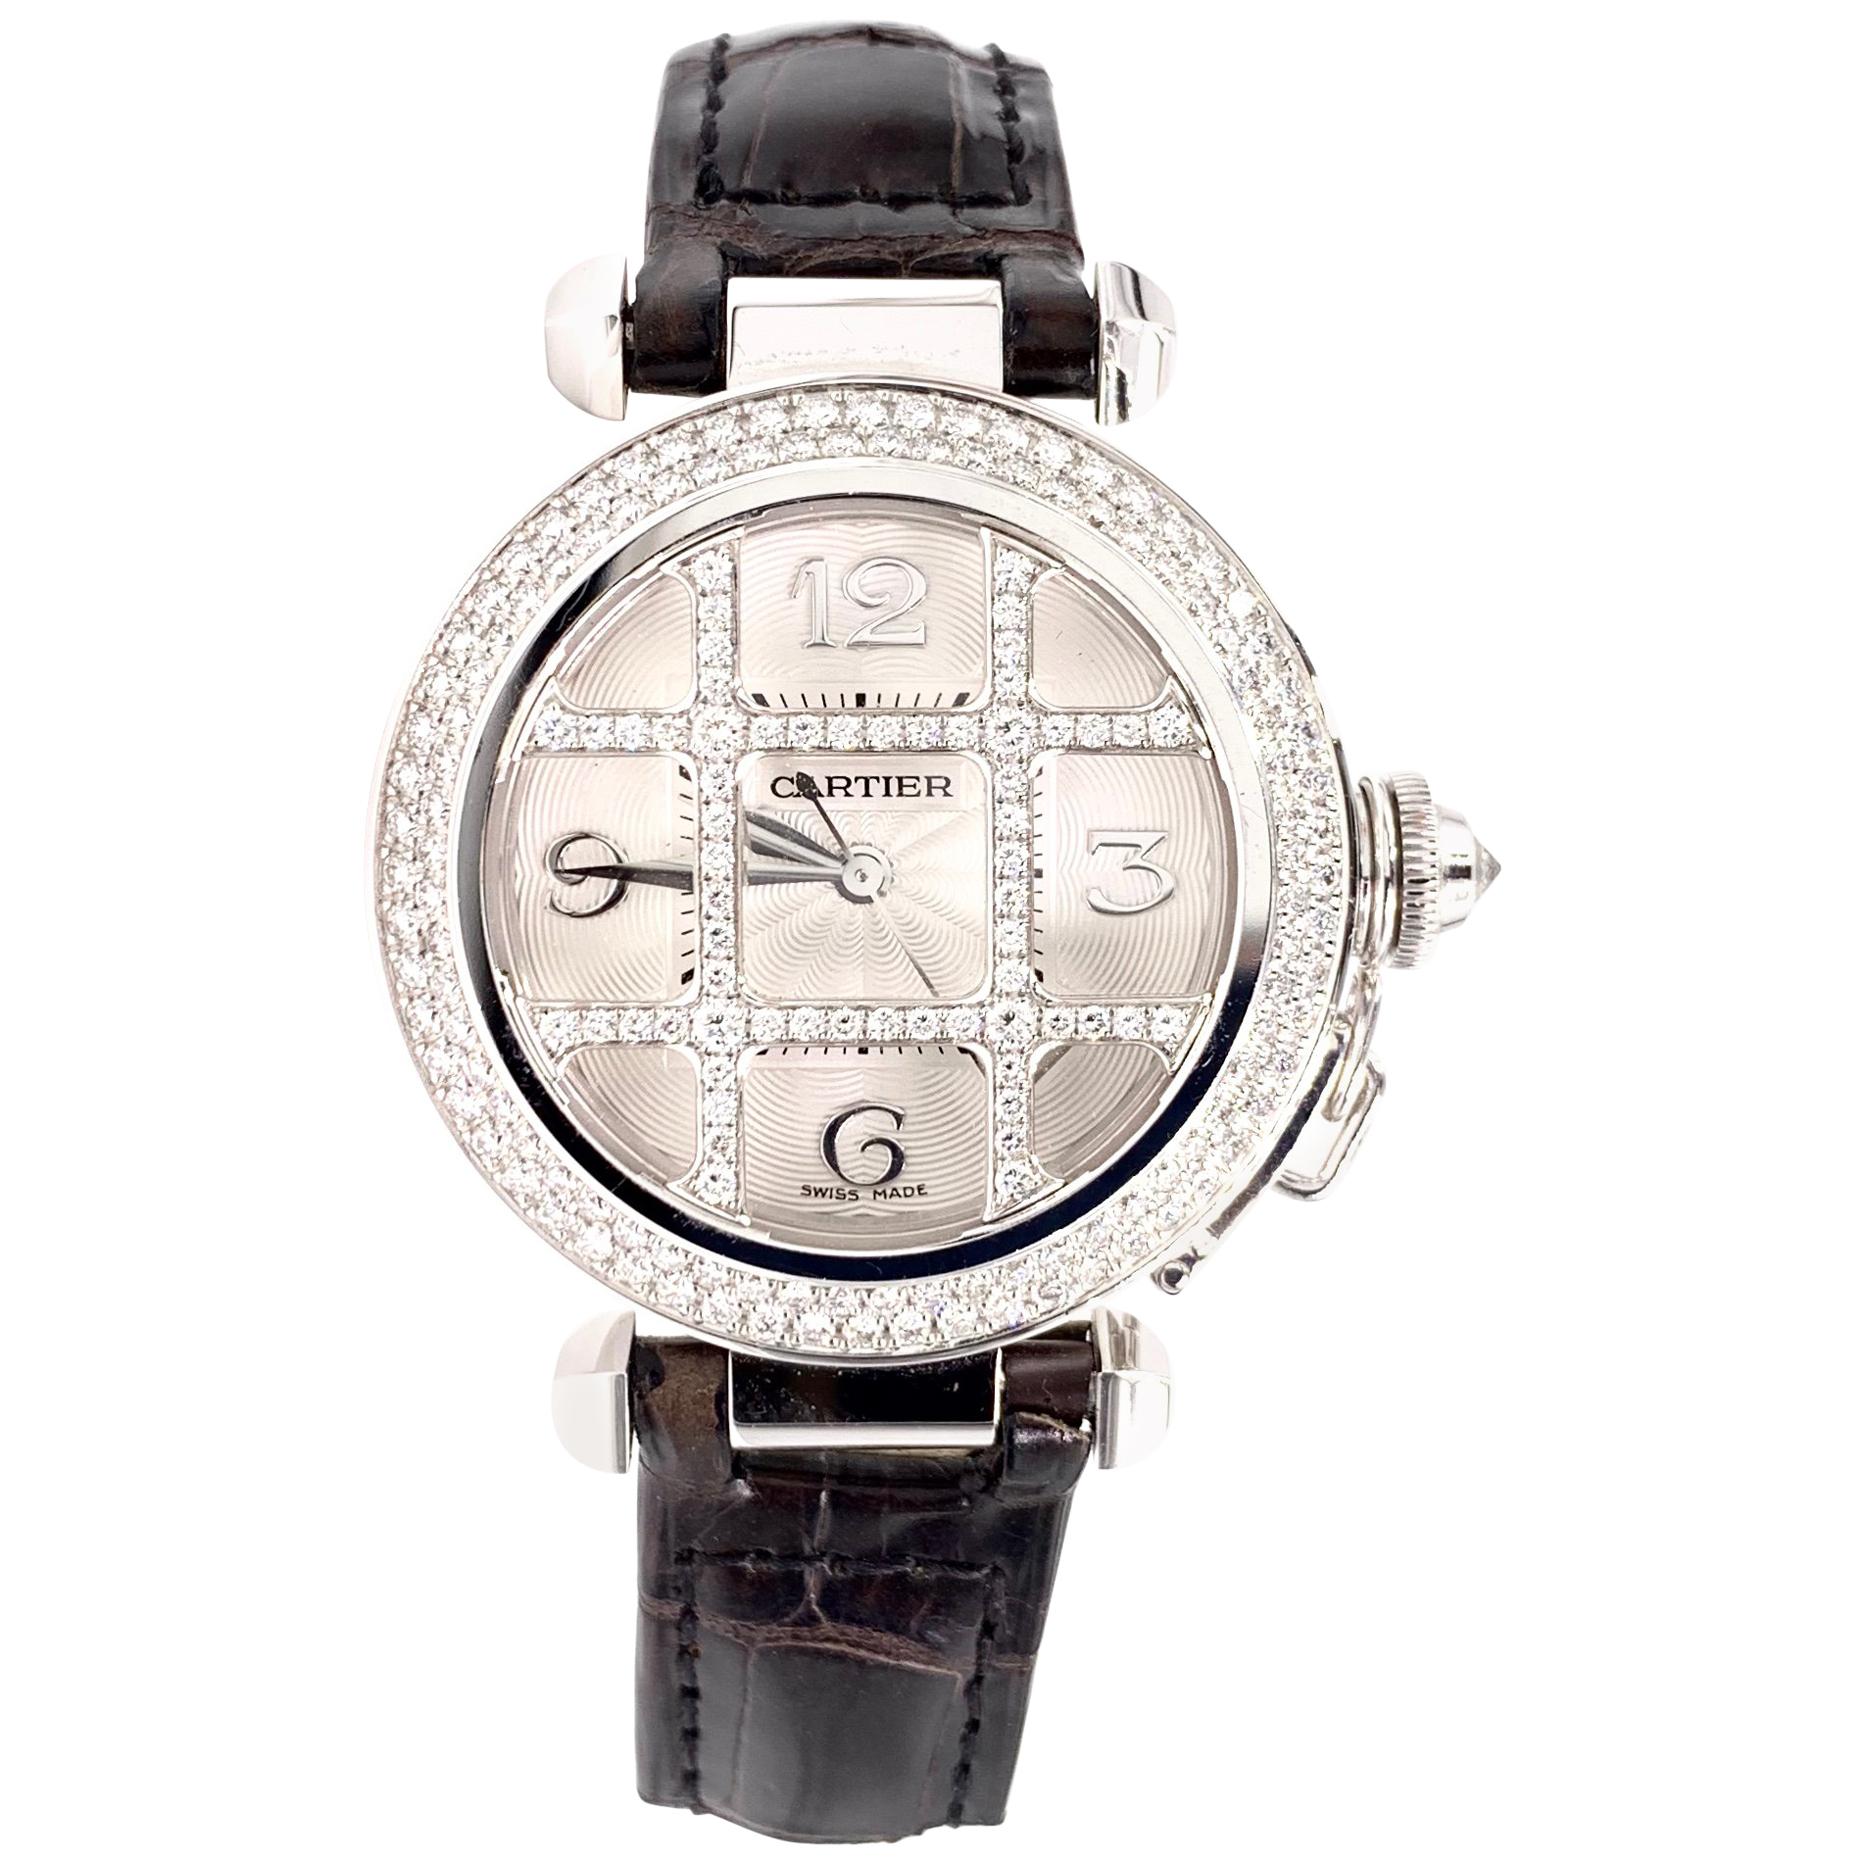 18 Karat and Diamond Cartier Pasha Watch WJ111451 For Sale